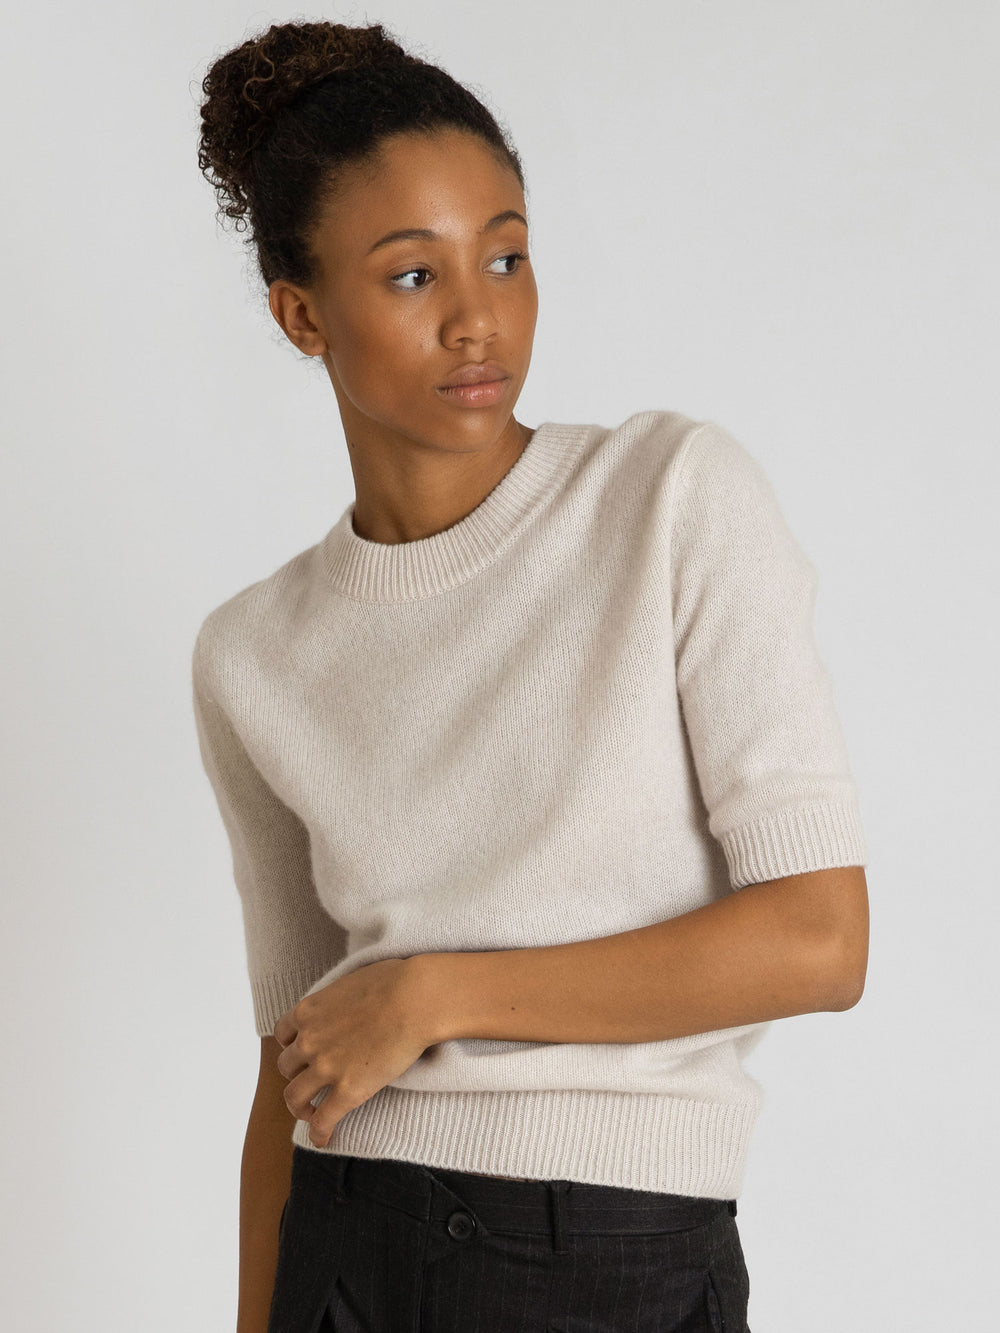 Short sleeved cashmere sweater from Kashmina 100% cashmere. Scandinavian design. Color: pearl